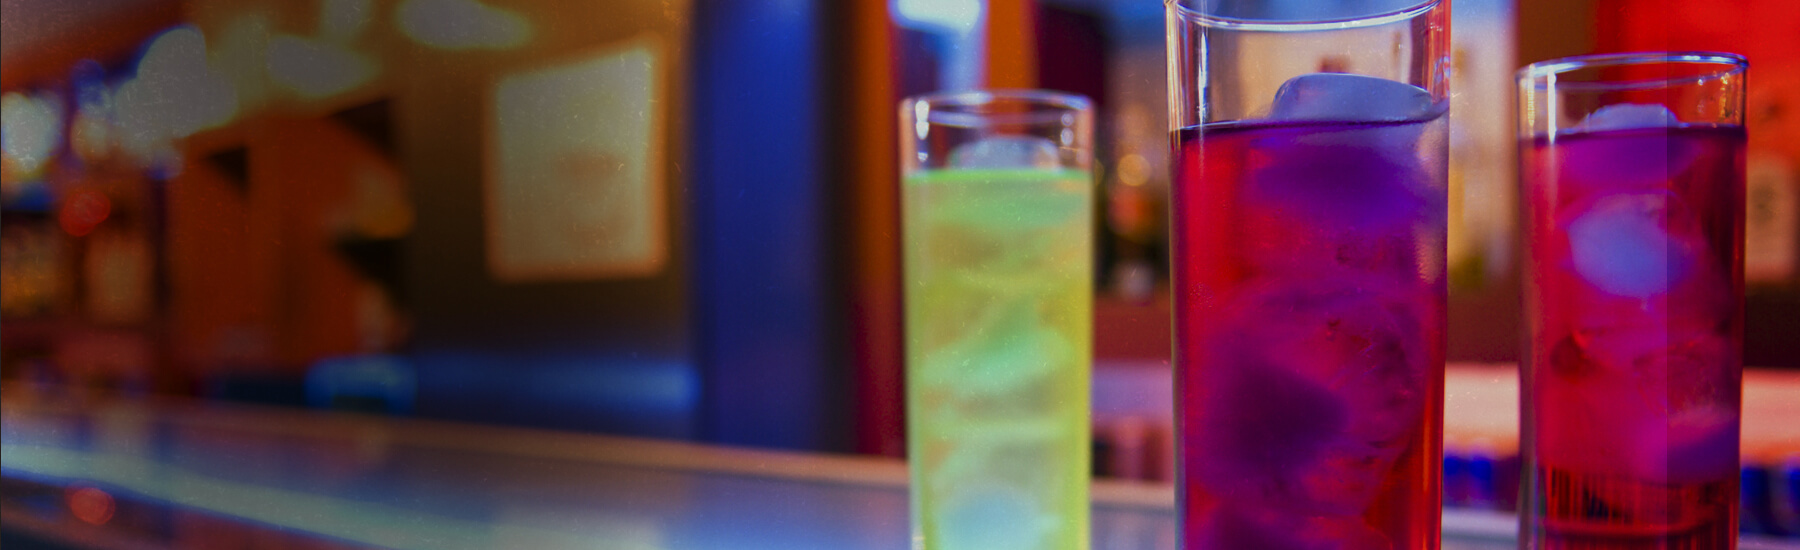 panoramique-cocktail